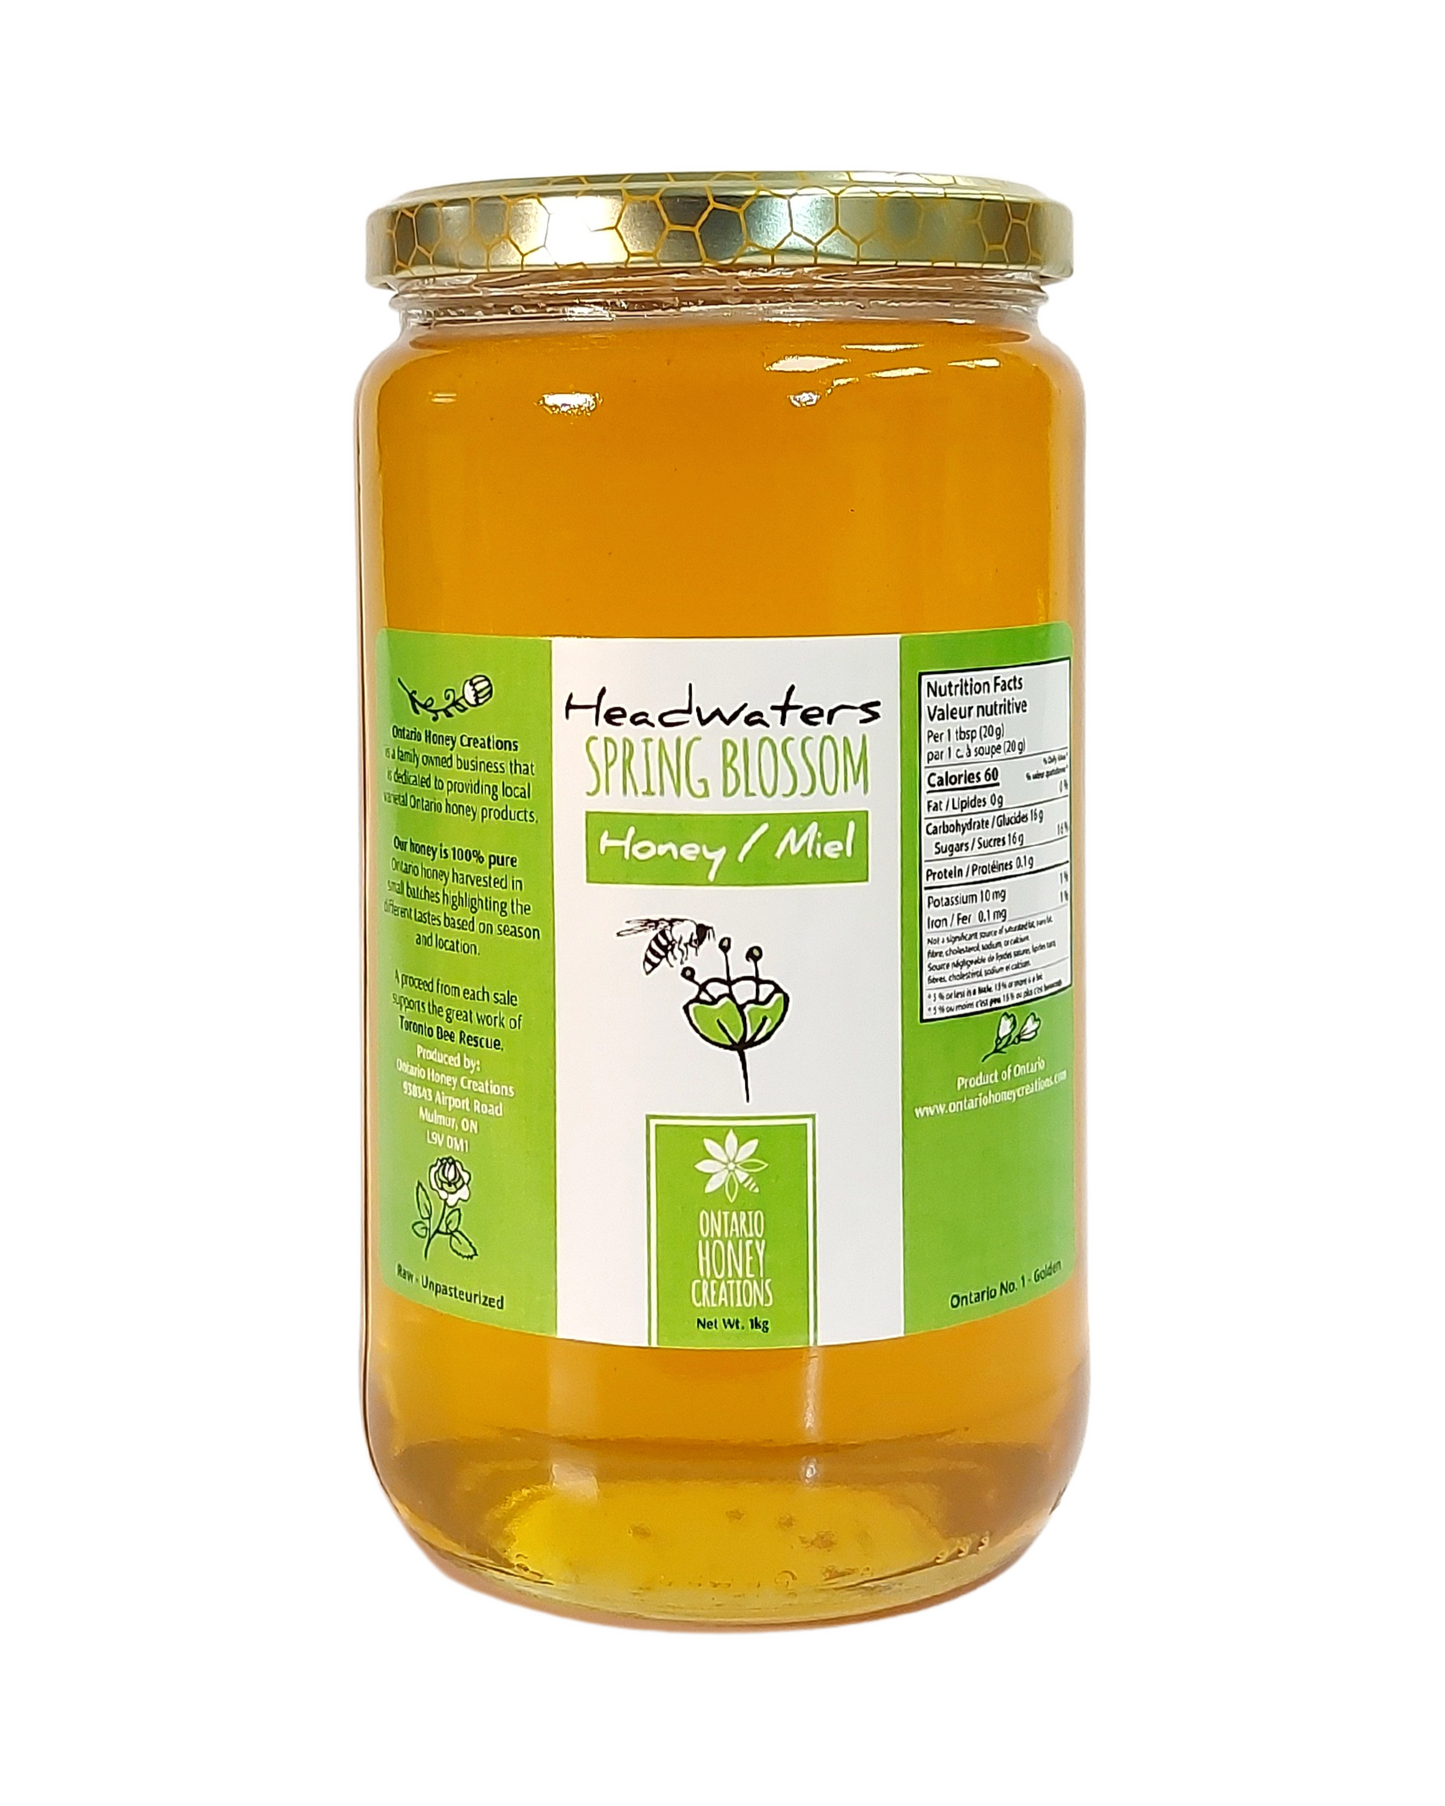 Headwaters Spring Blossom Honey 1kg